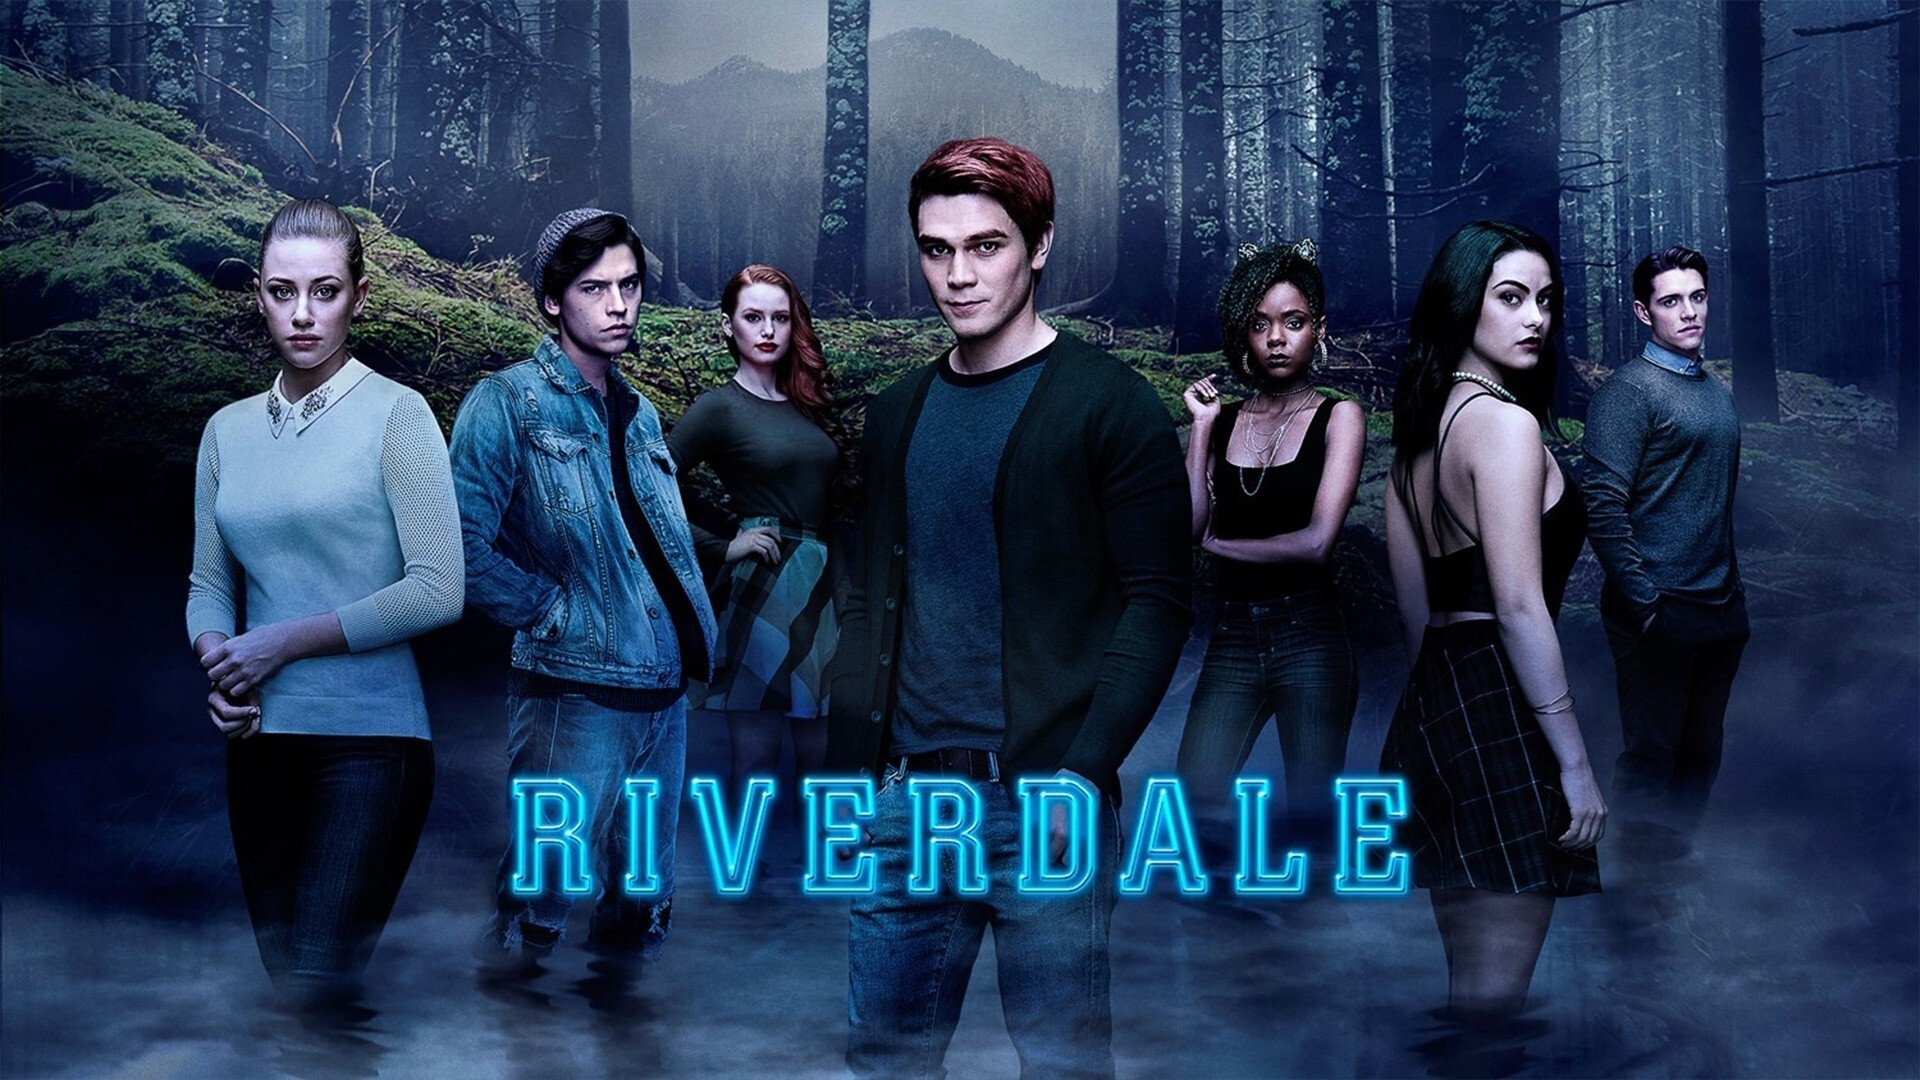 Riverdale (TV Series): Madelaine Petsch as Cheryl Blossom, Ashleigh Murray as Josie McCoy, Casey Cott as Kevin Keller. 1920x1080 Full HD Background.